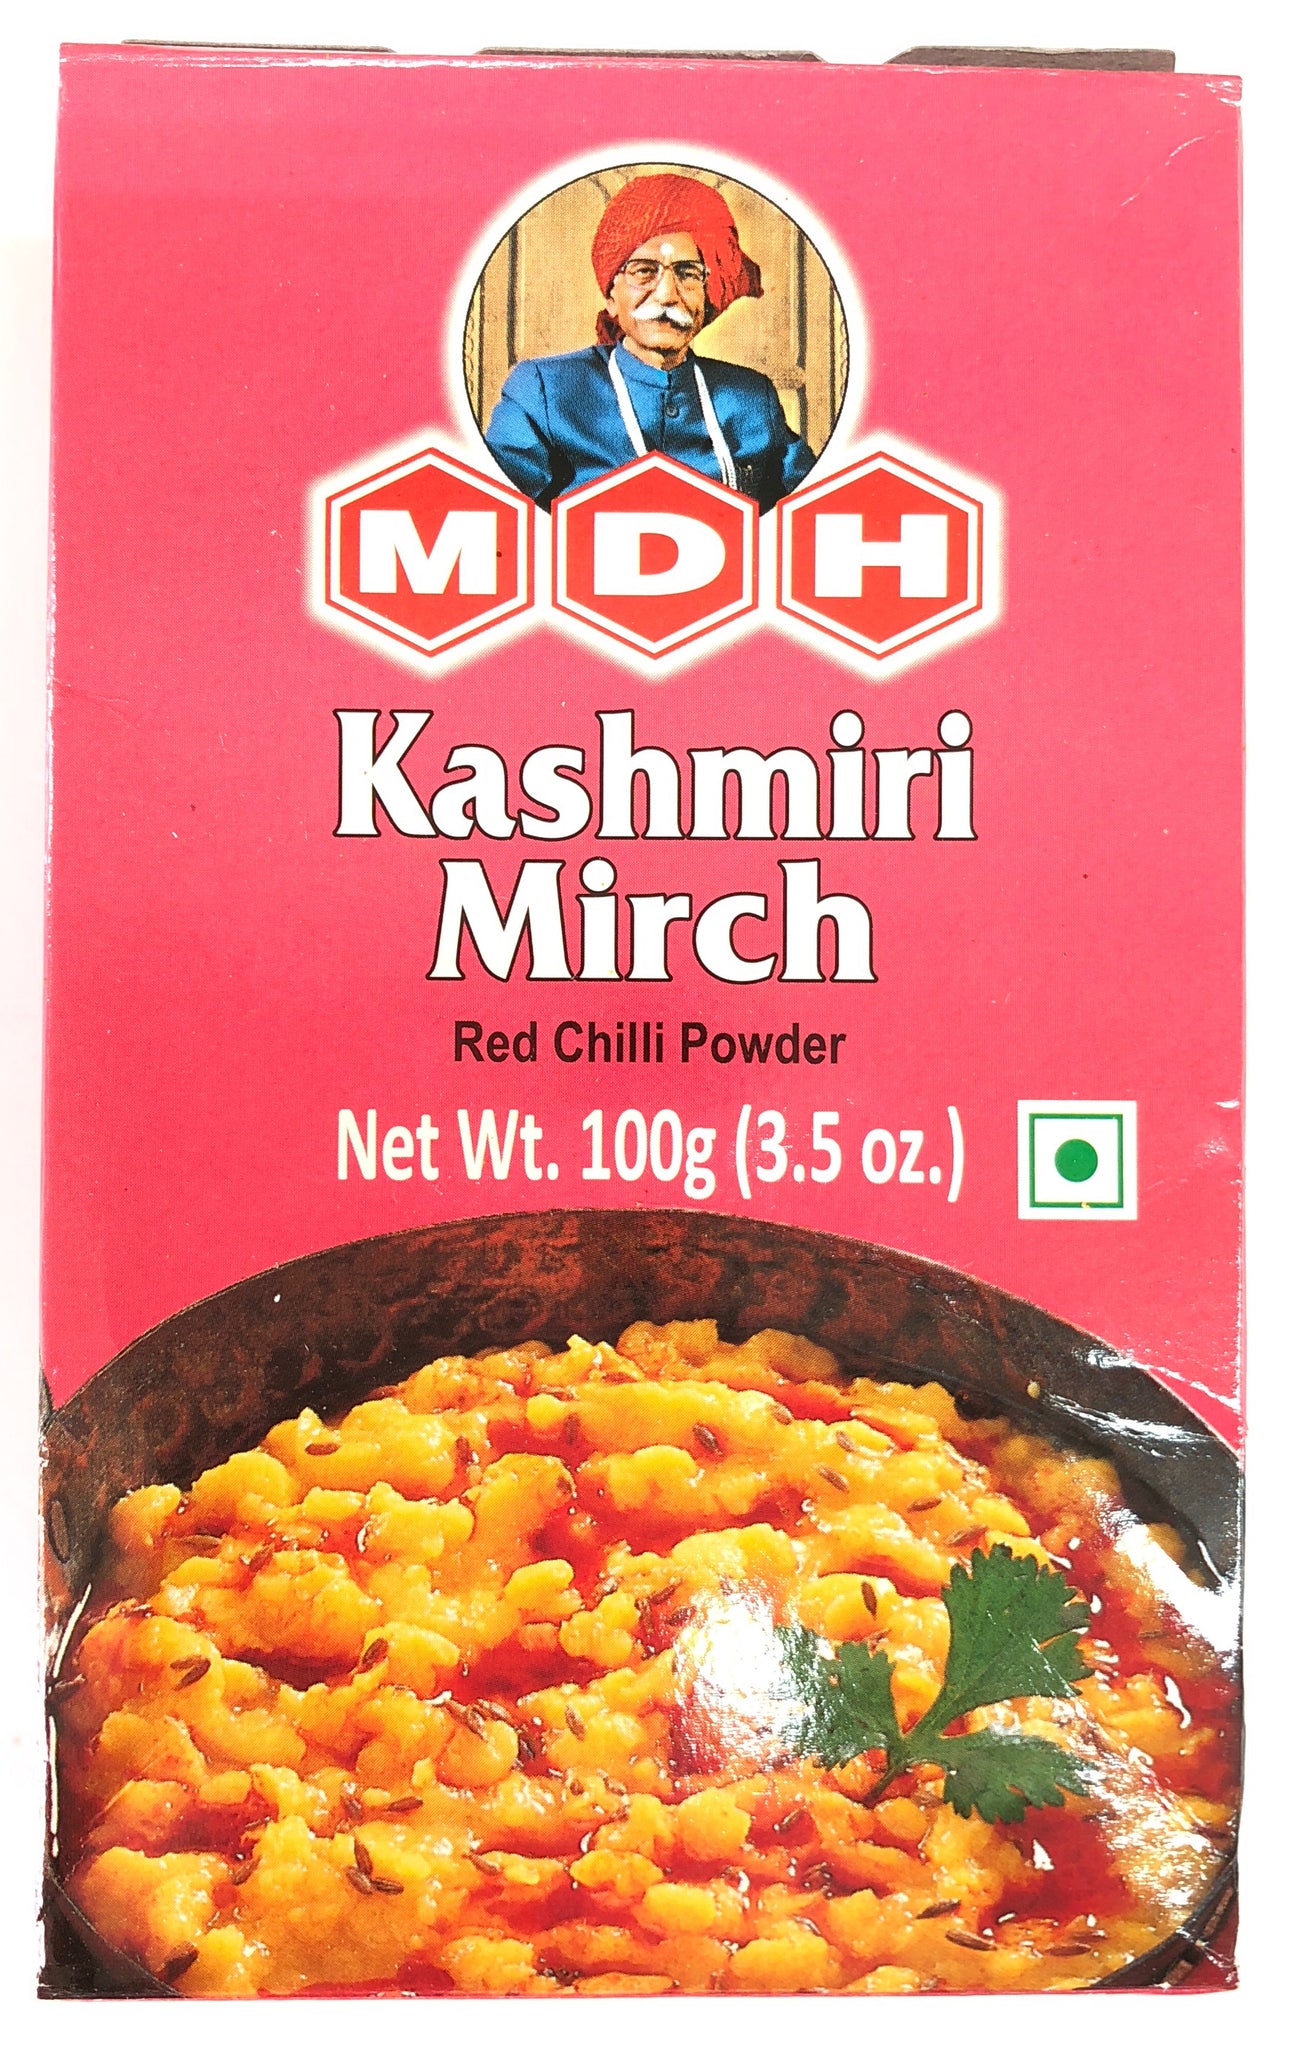 Kashmiri Mirch